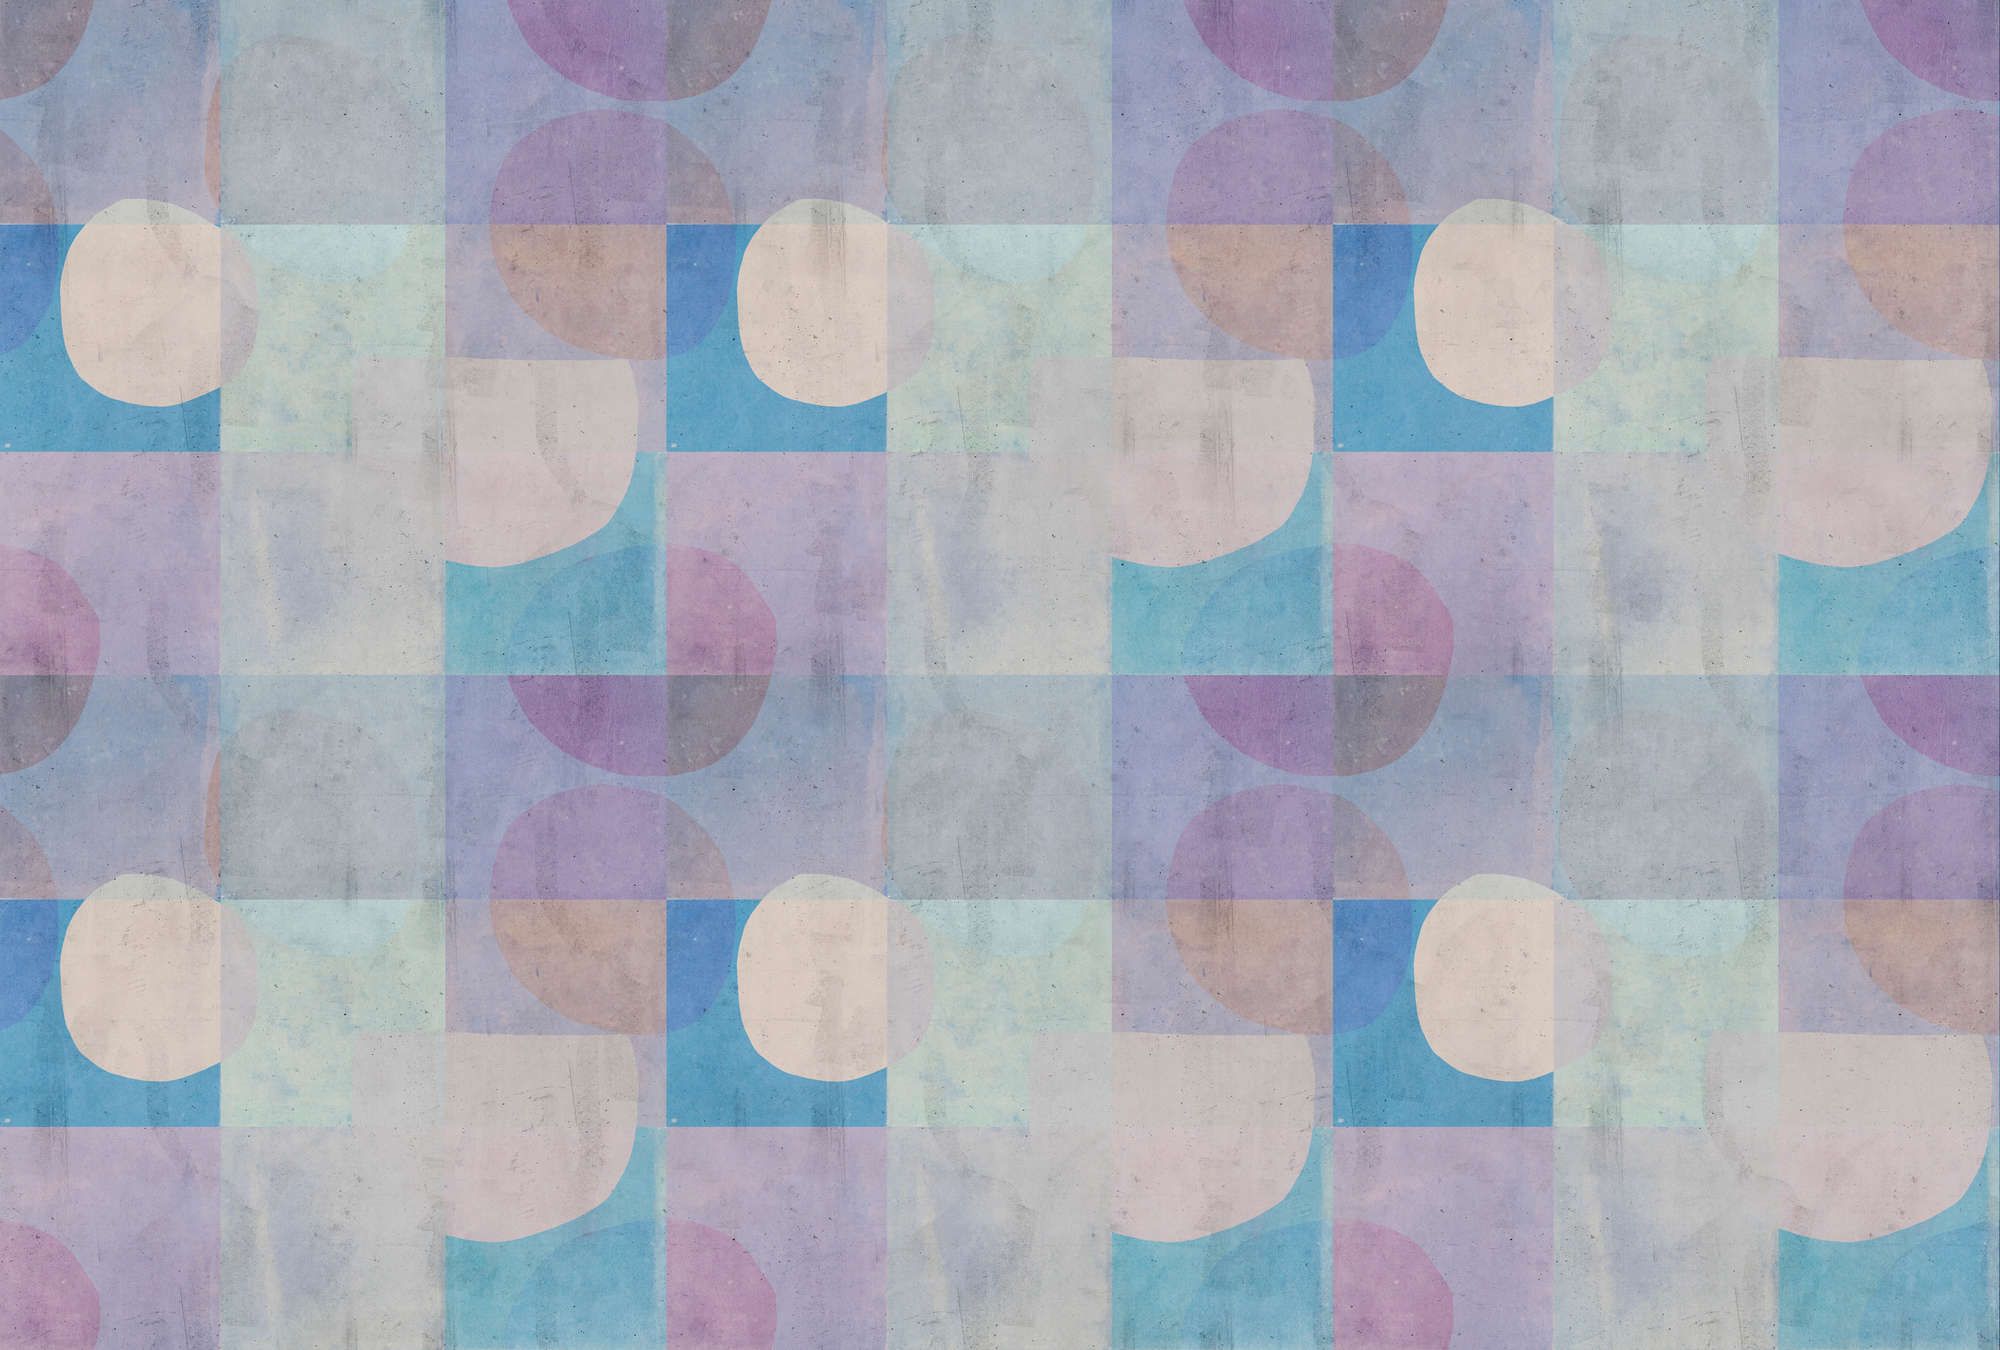             Photo wallpaper »elija 2« - retro pattern in concrete look - blue, purple | matt, smooth non-woven
        